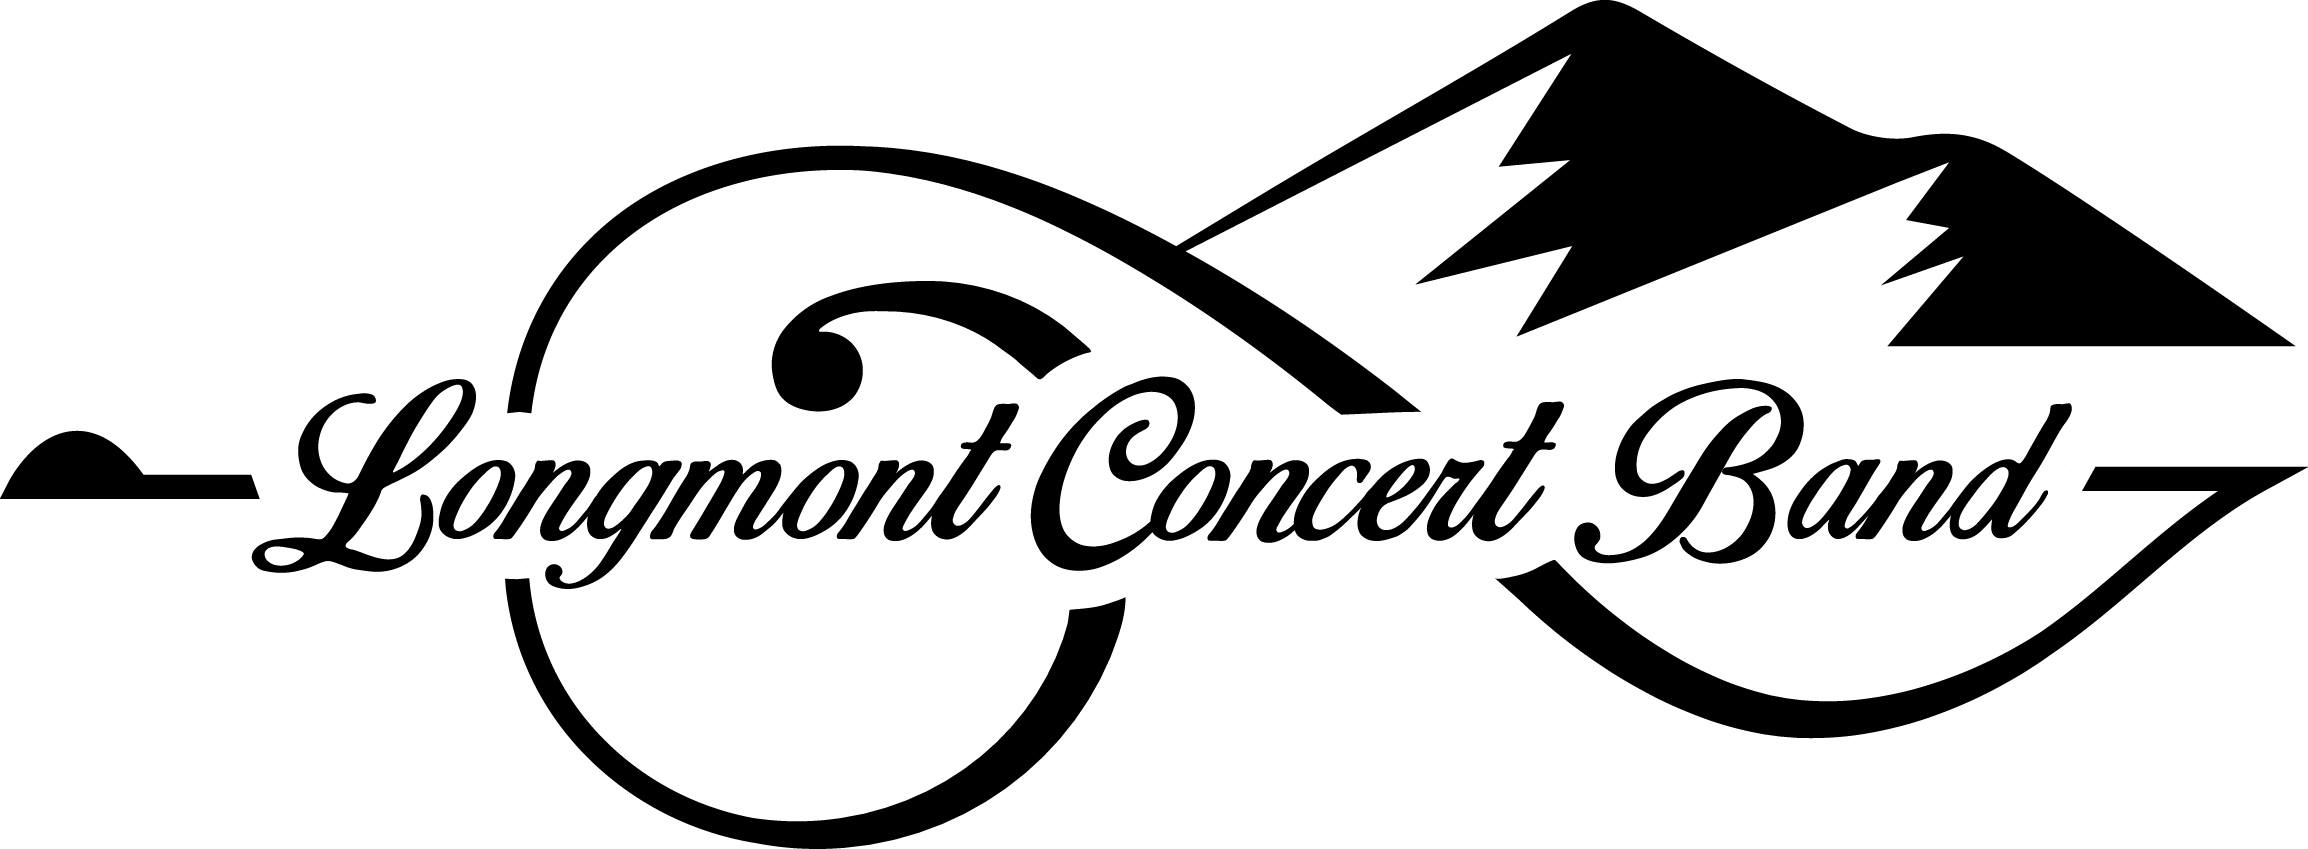 Longmont Concert Band